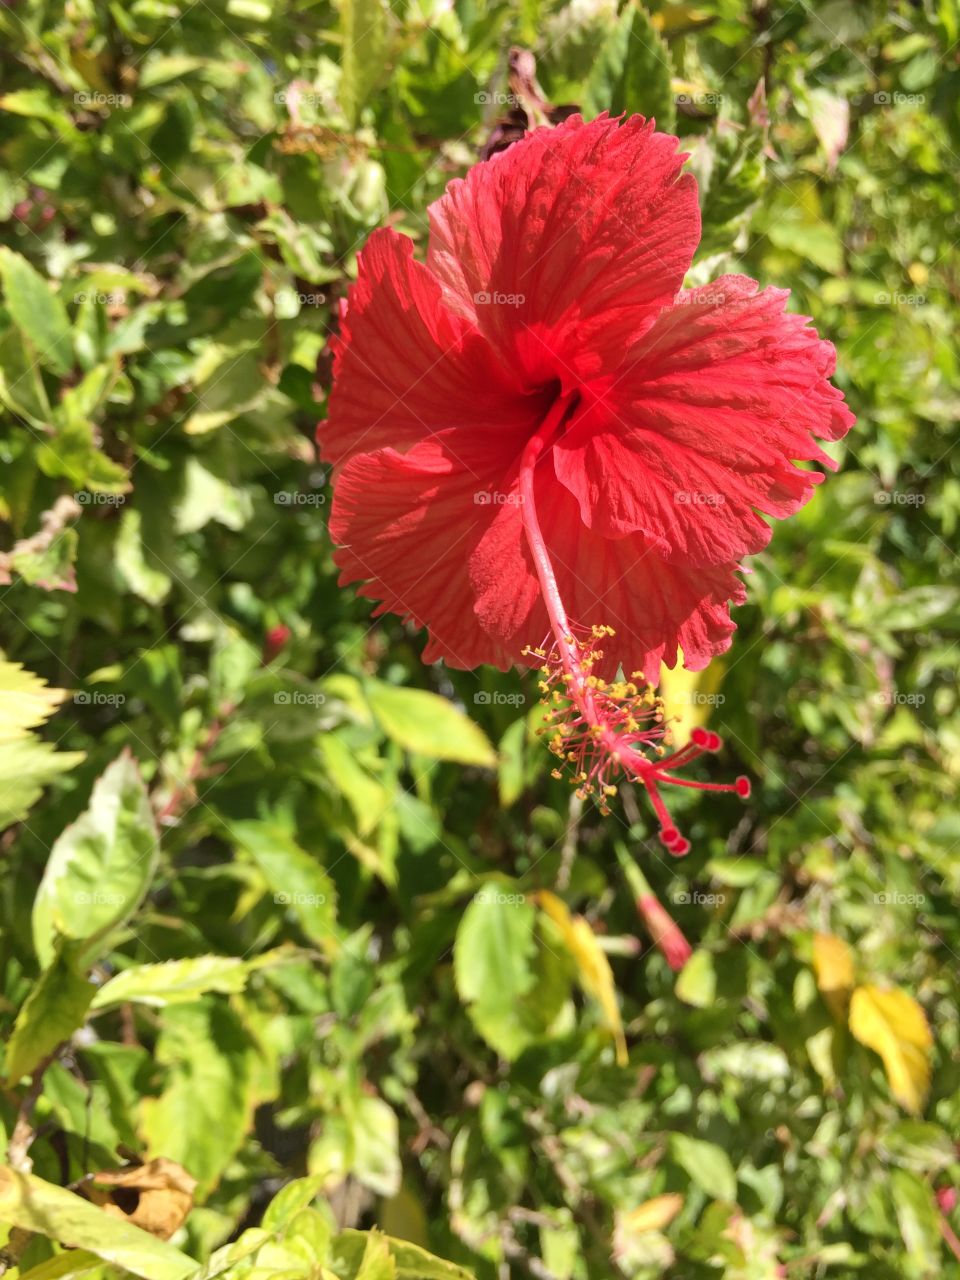 Red tropical flowers. Key West, FL. 